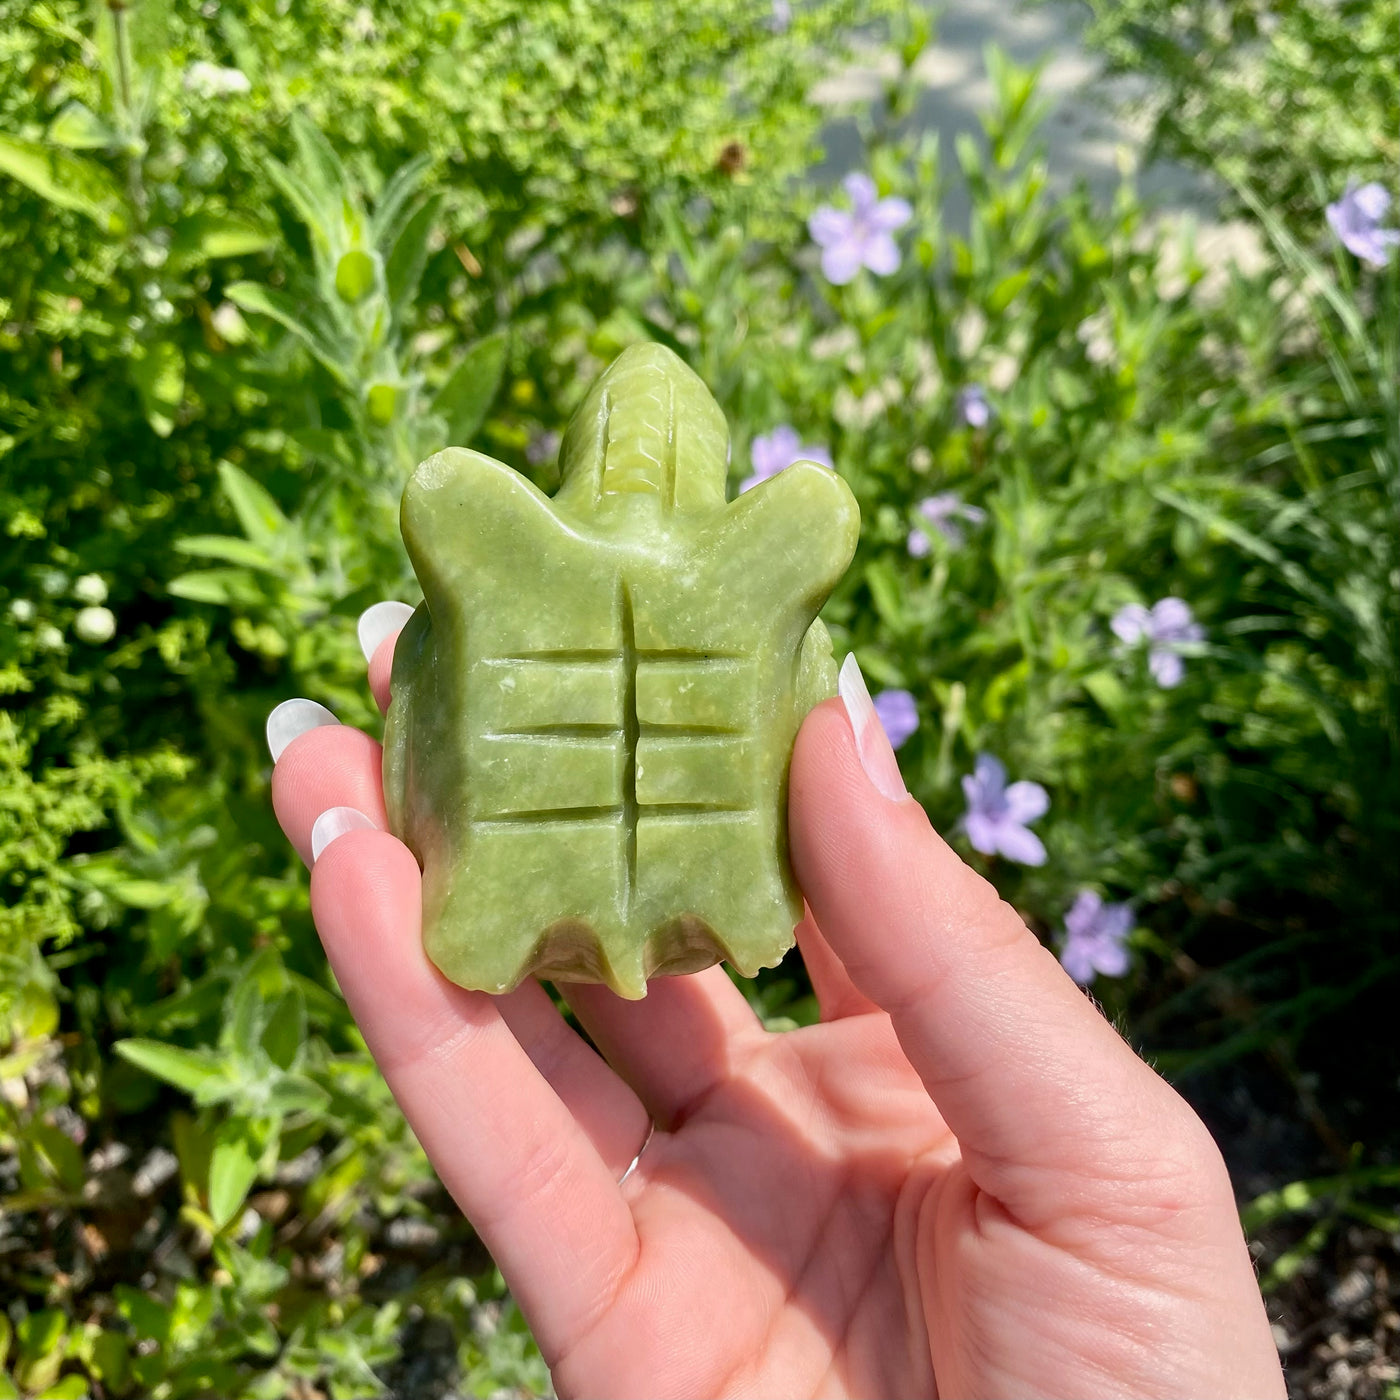 Nephrite Jade Companion Carved Turtle